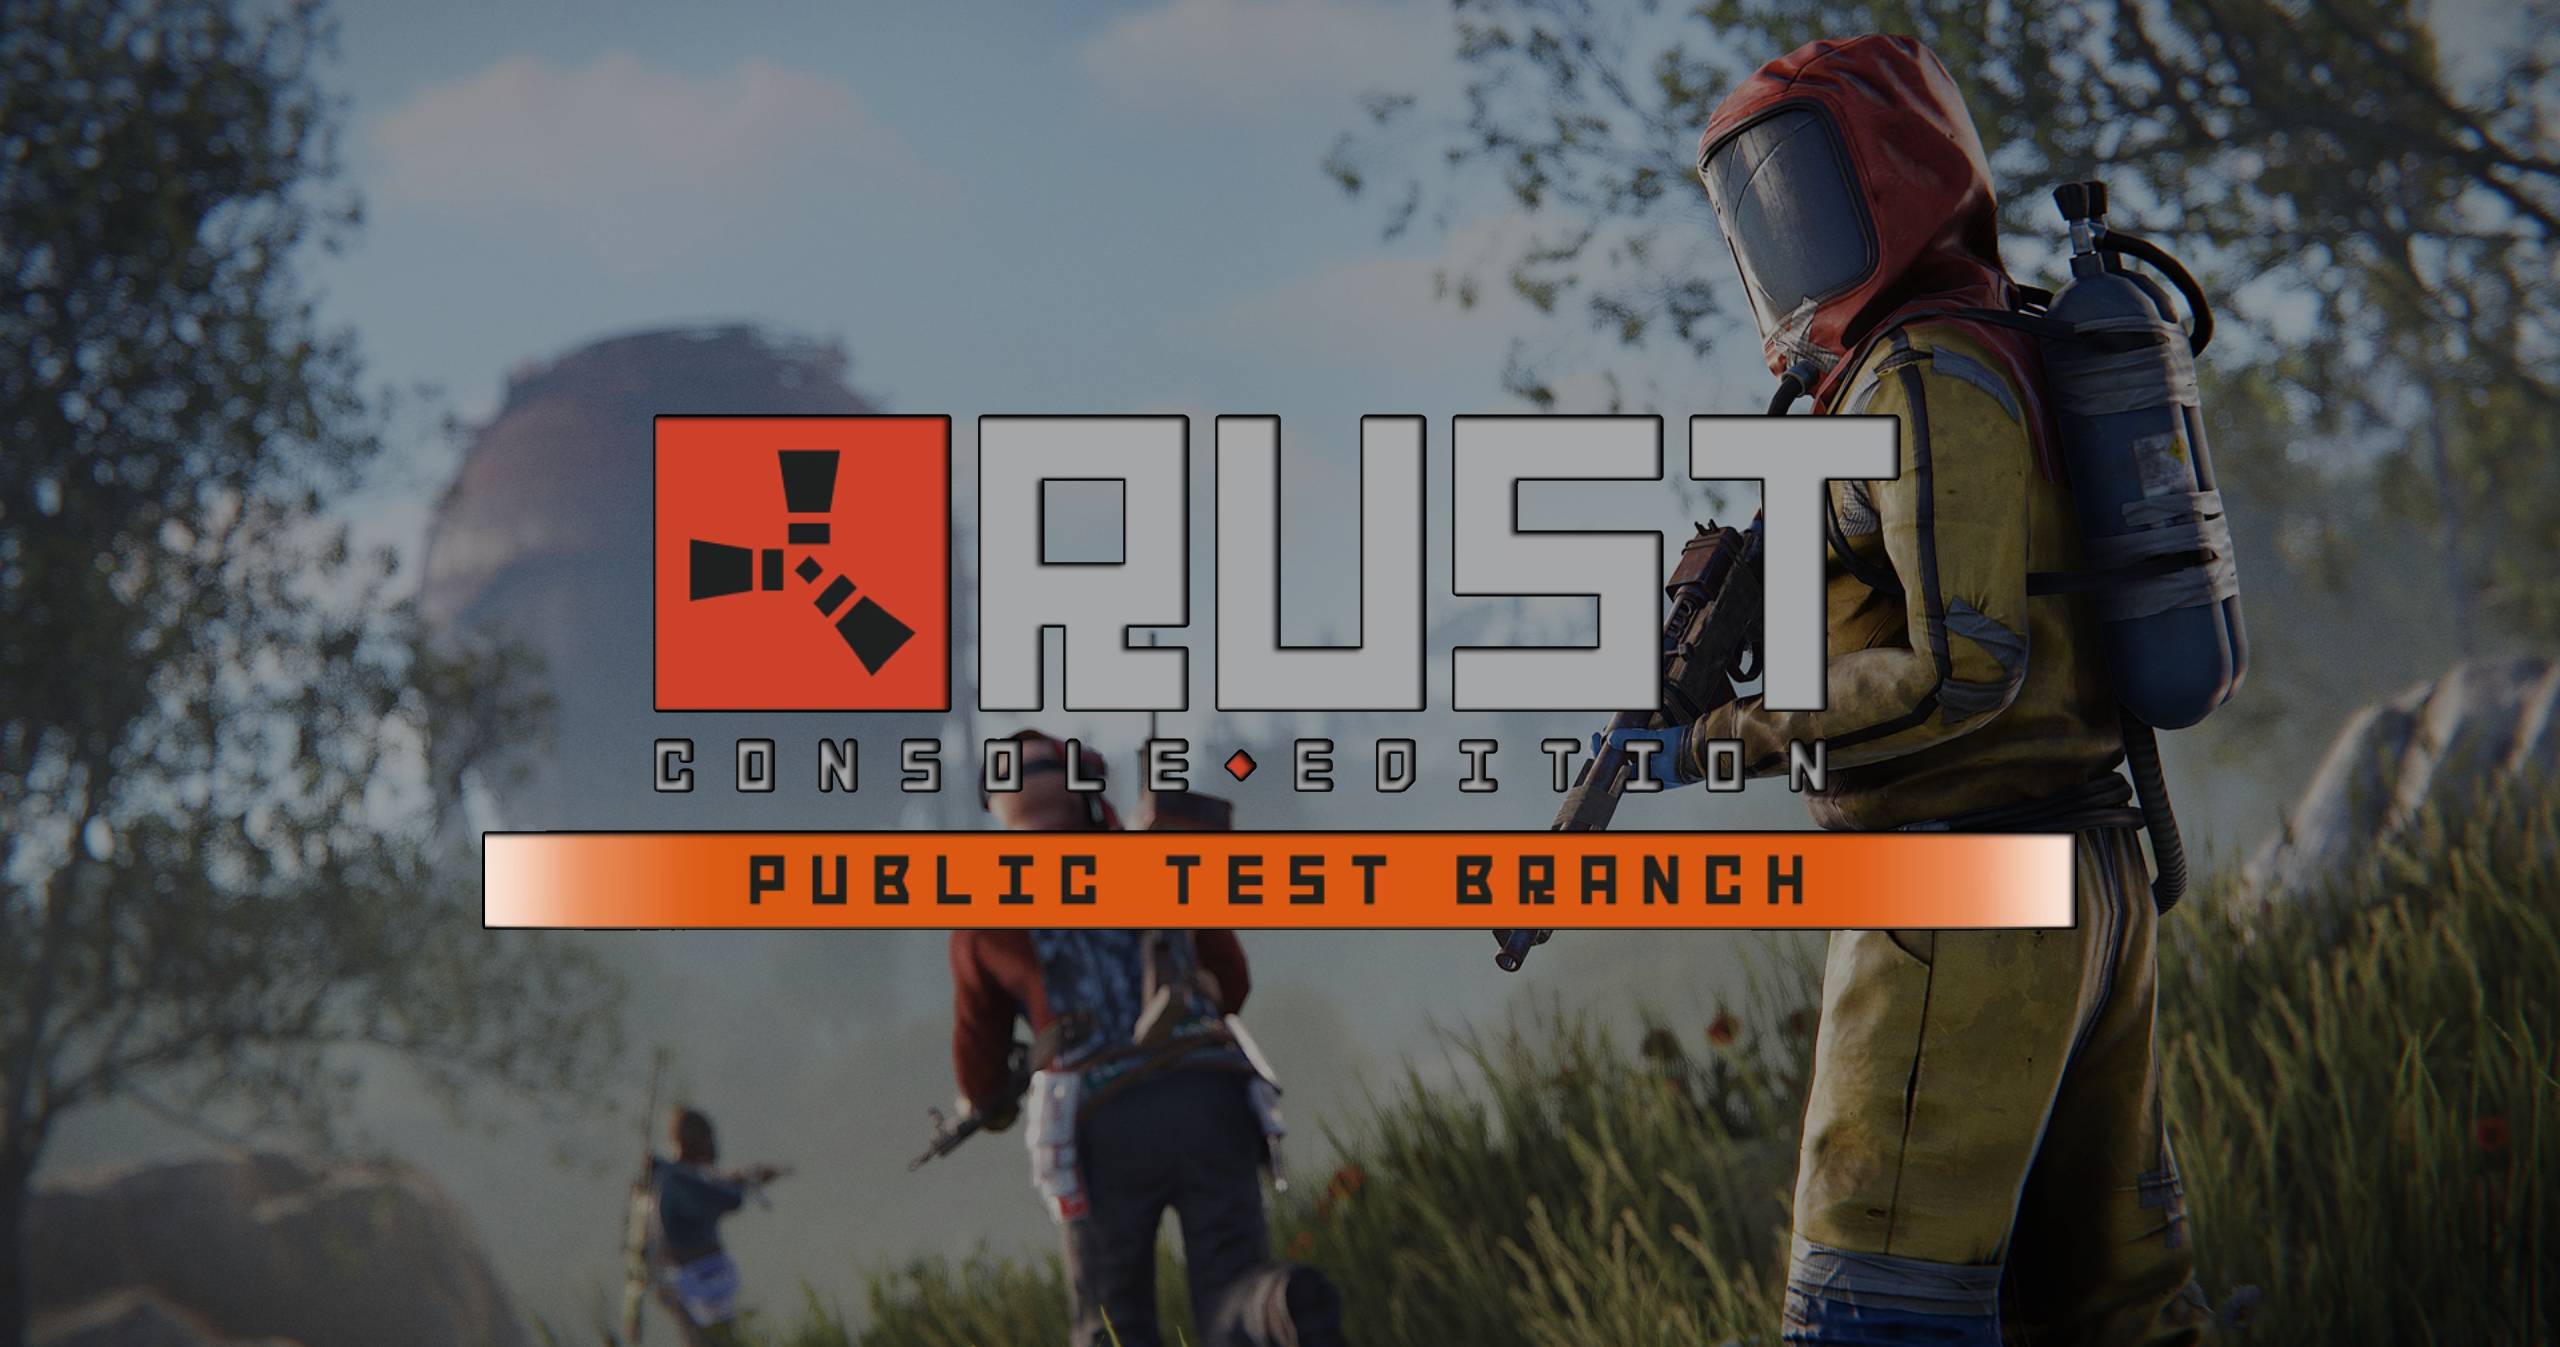 Rust Console Public Test Branch